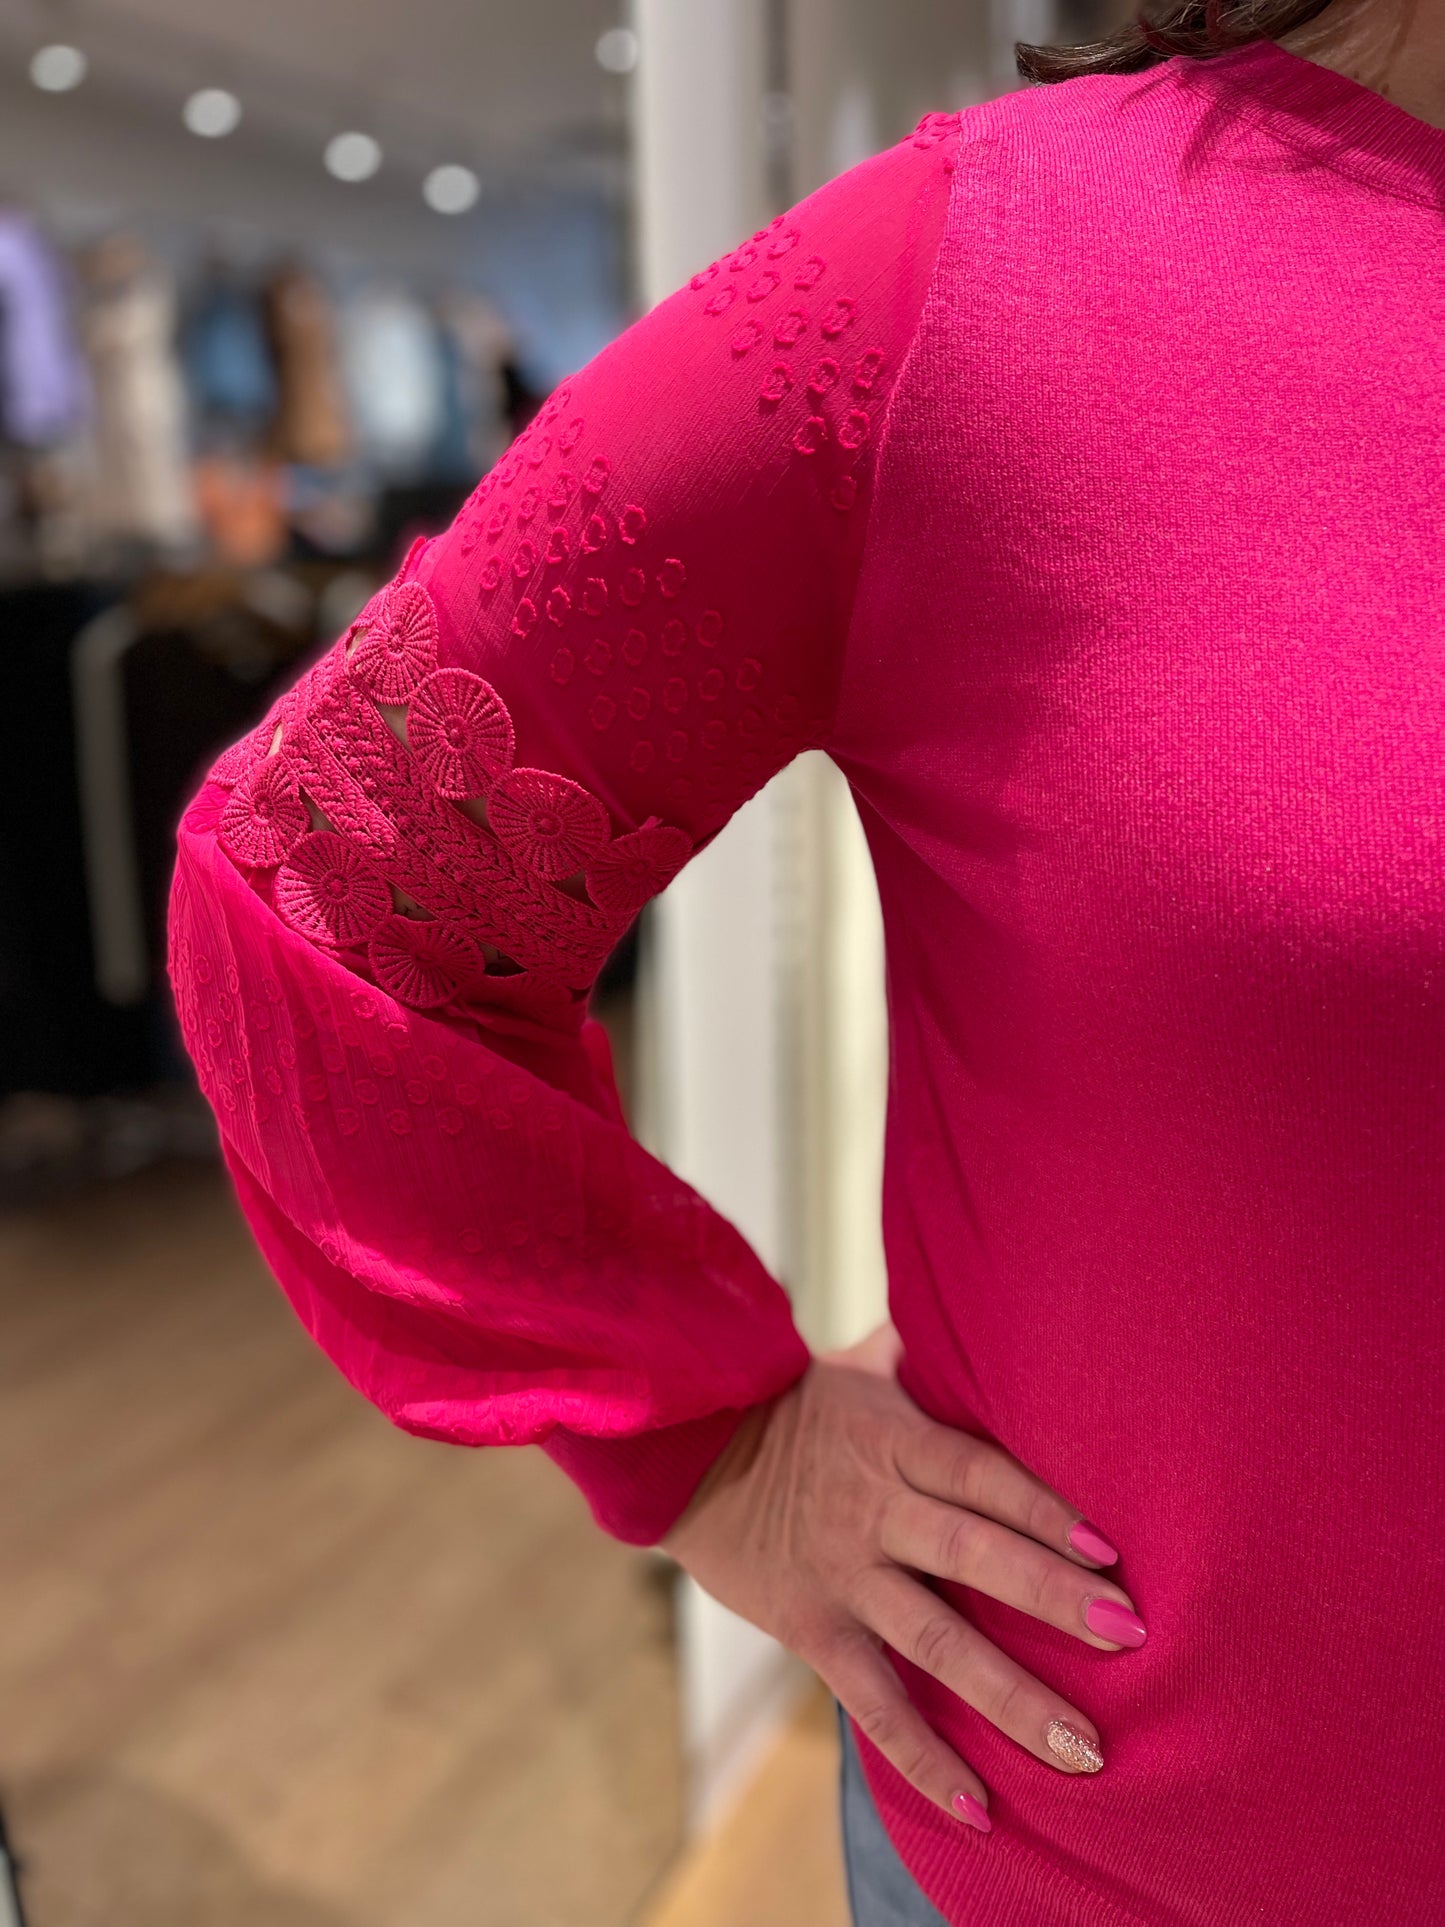 Terton Knit/Top - Bright Pink